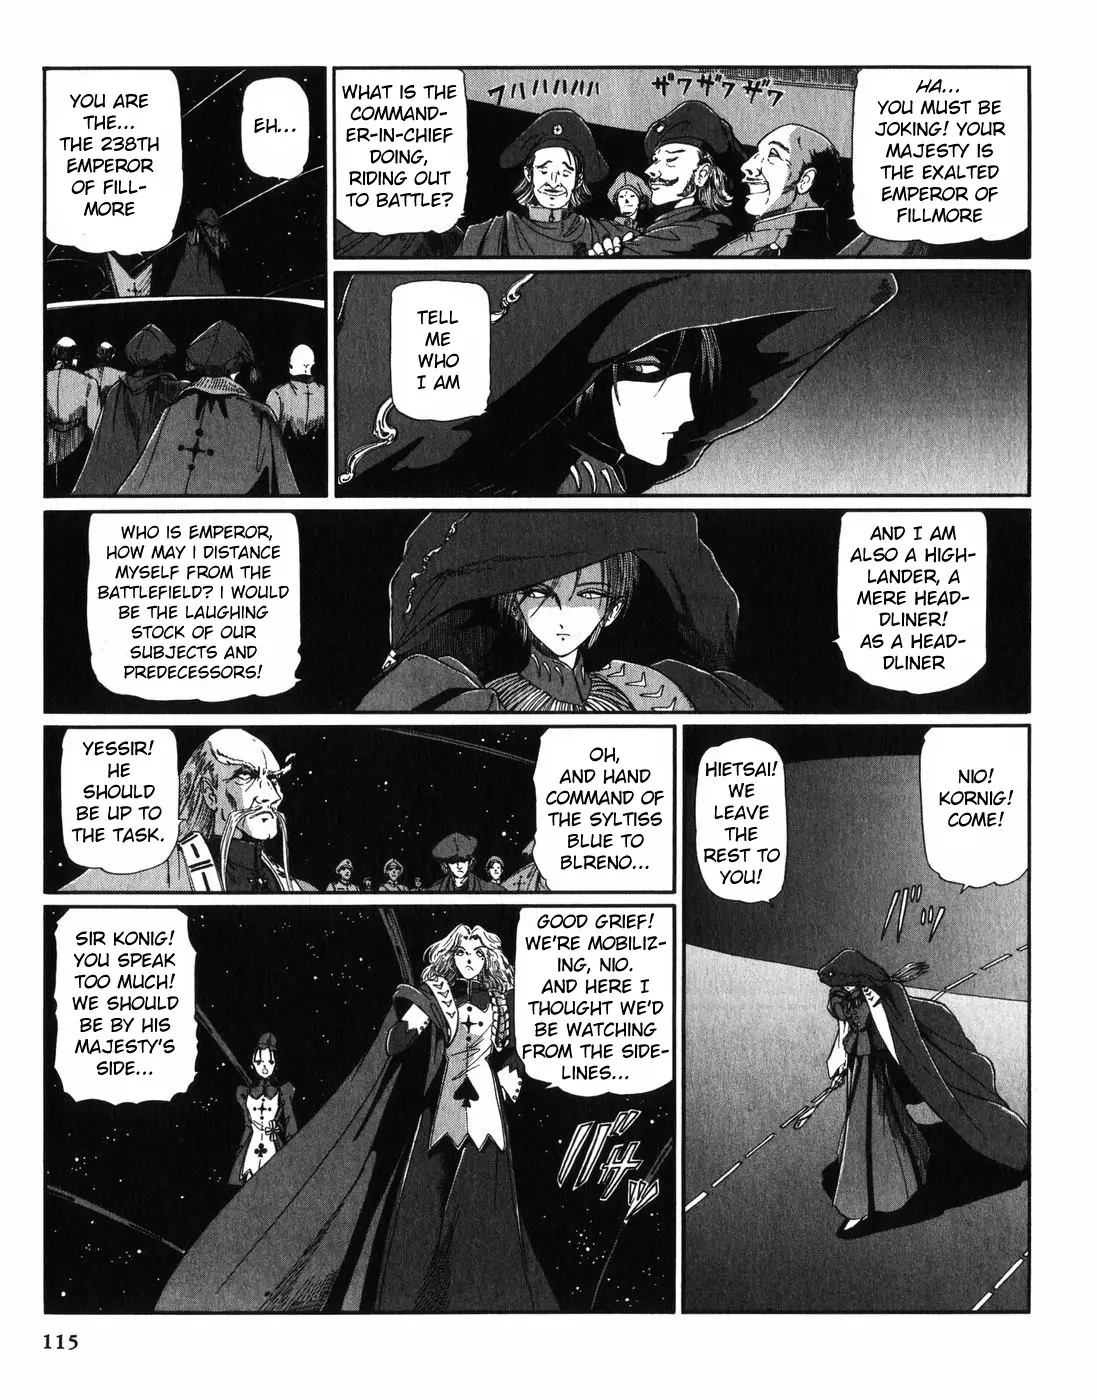 Five Star Monogatari - 28 page 36-477c00d8